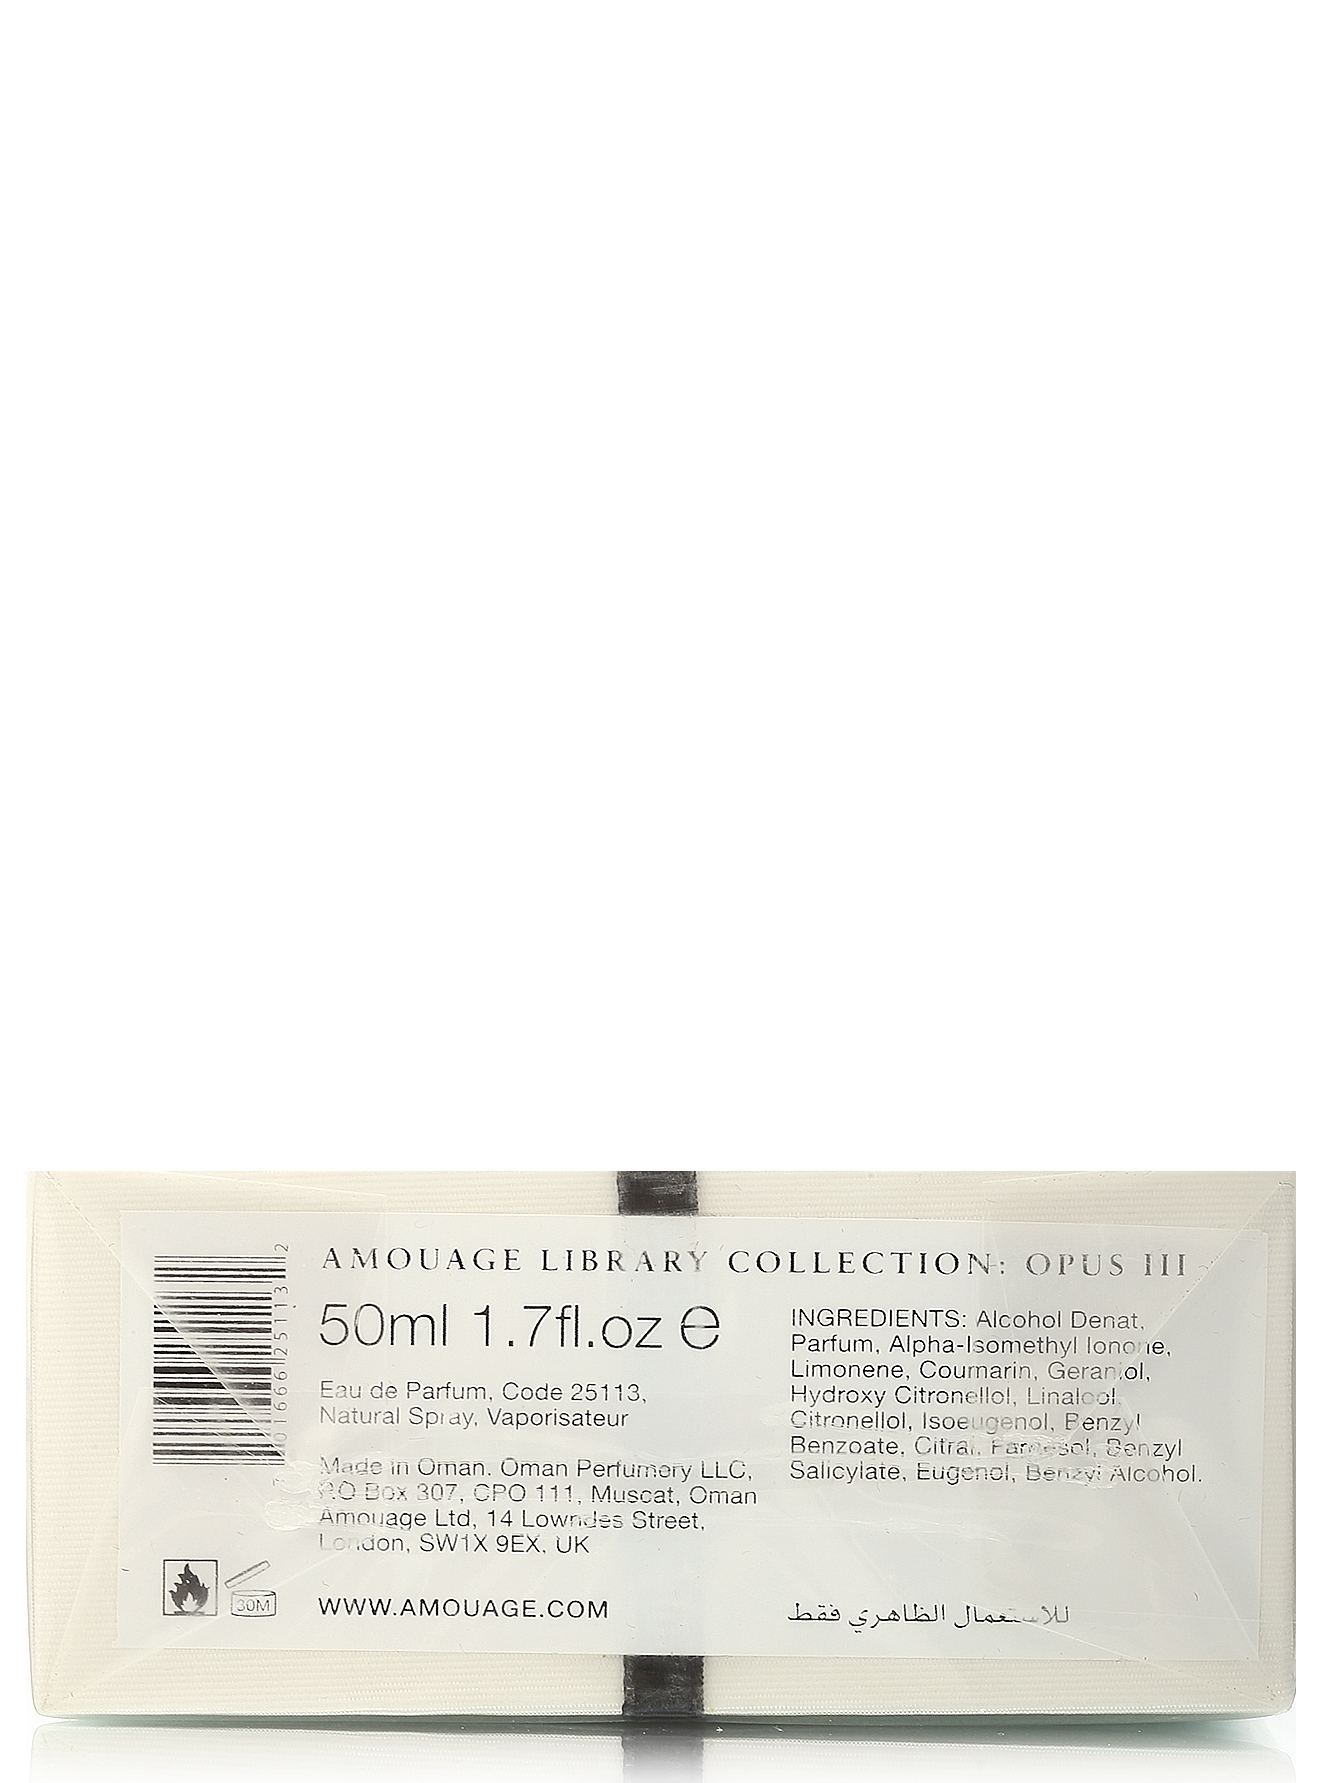  Парфюмерная вода - Опус III Library Collection, 50ml - Модель Верх-Низ